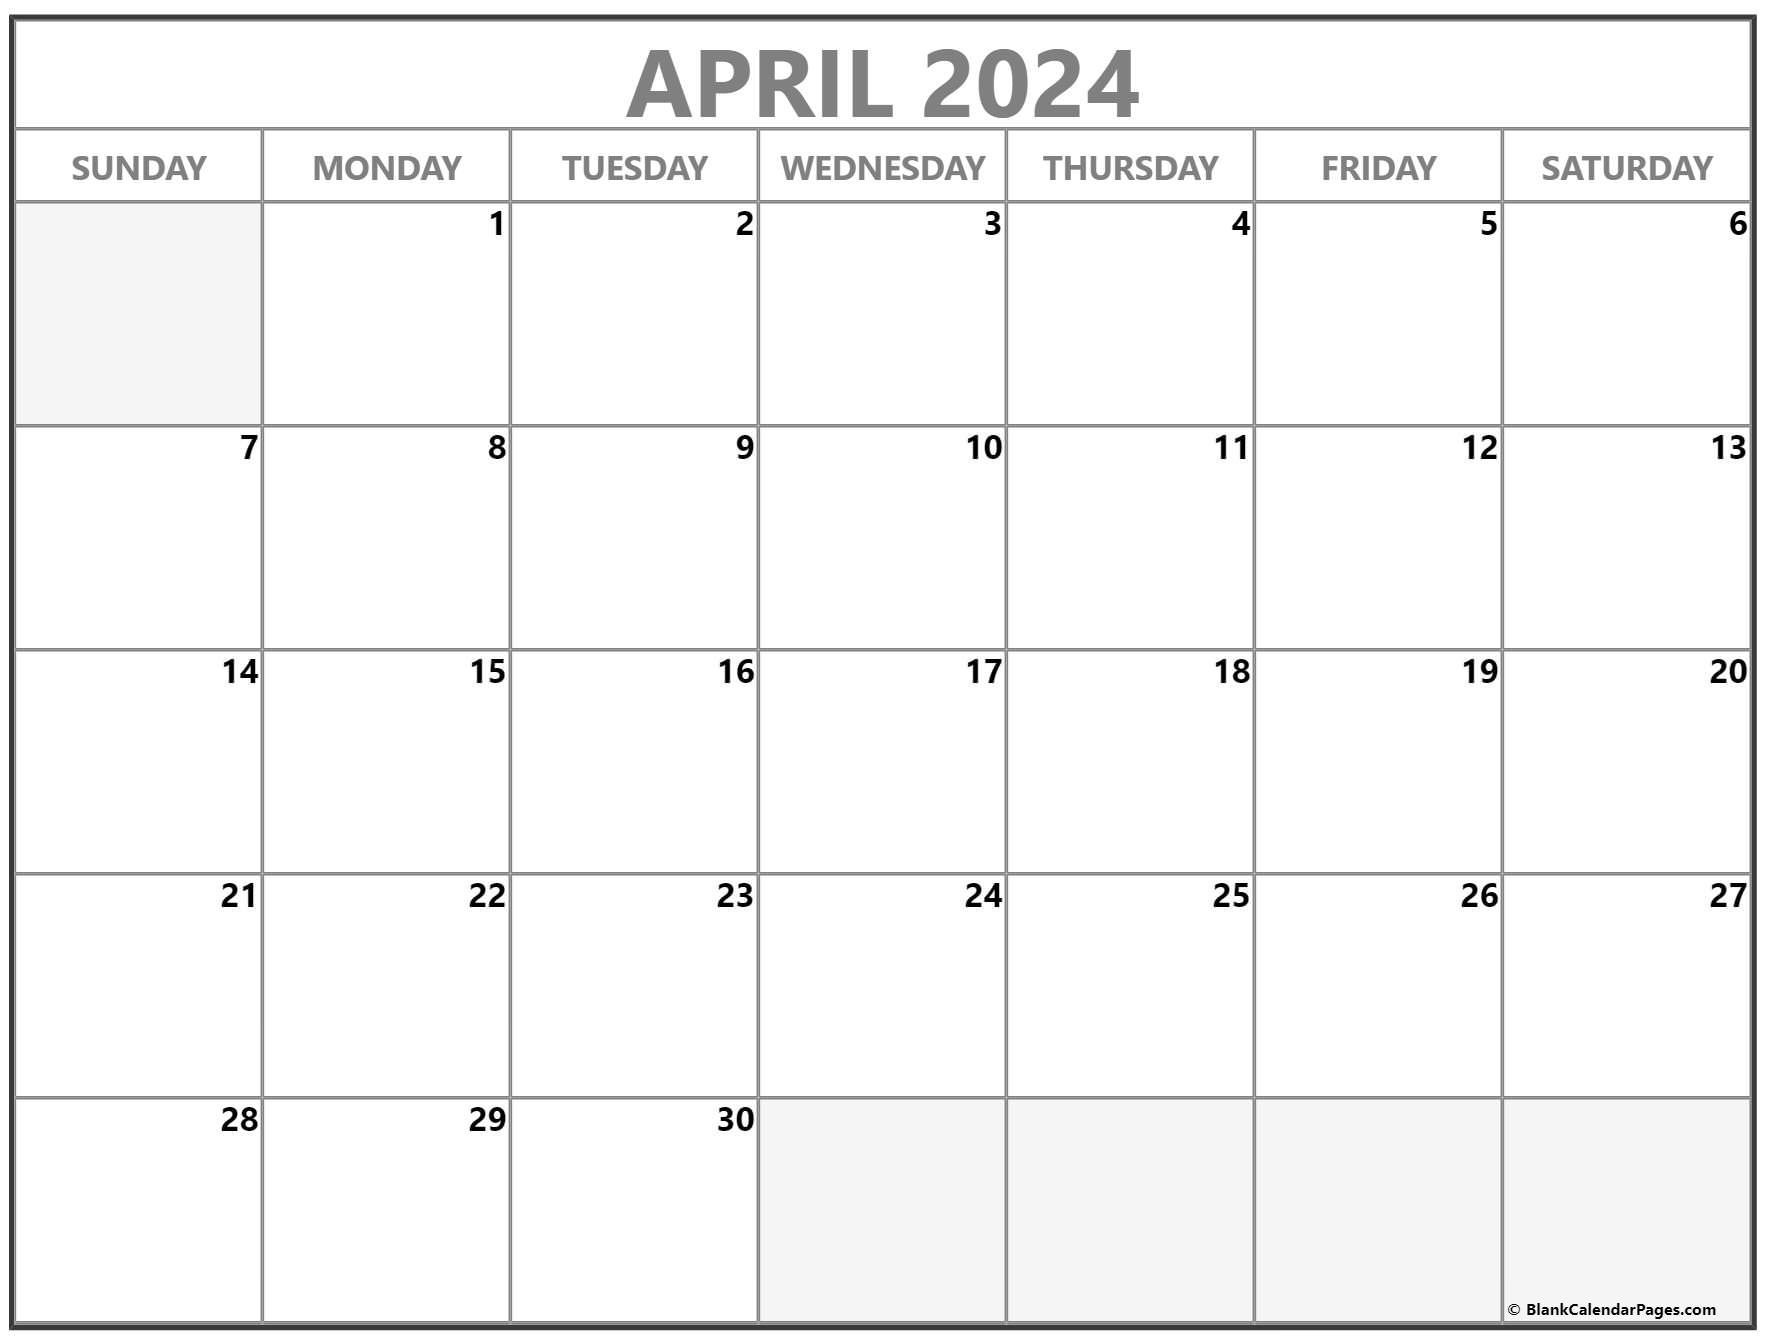 free-printable-april-2023-calendars-wiki-calendar-bank2home